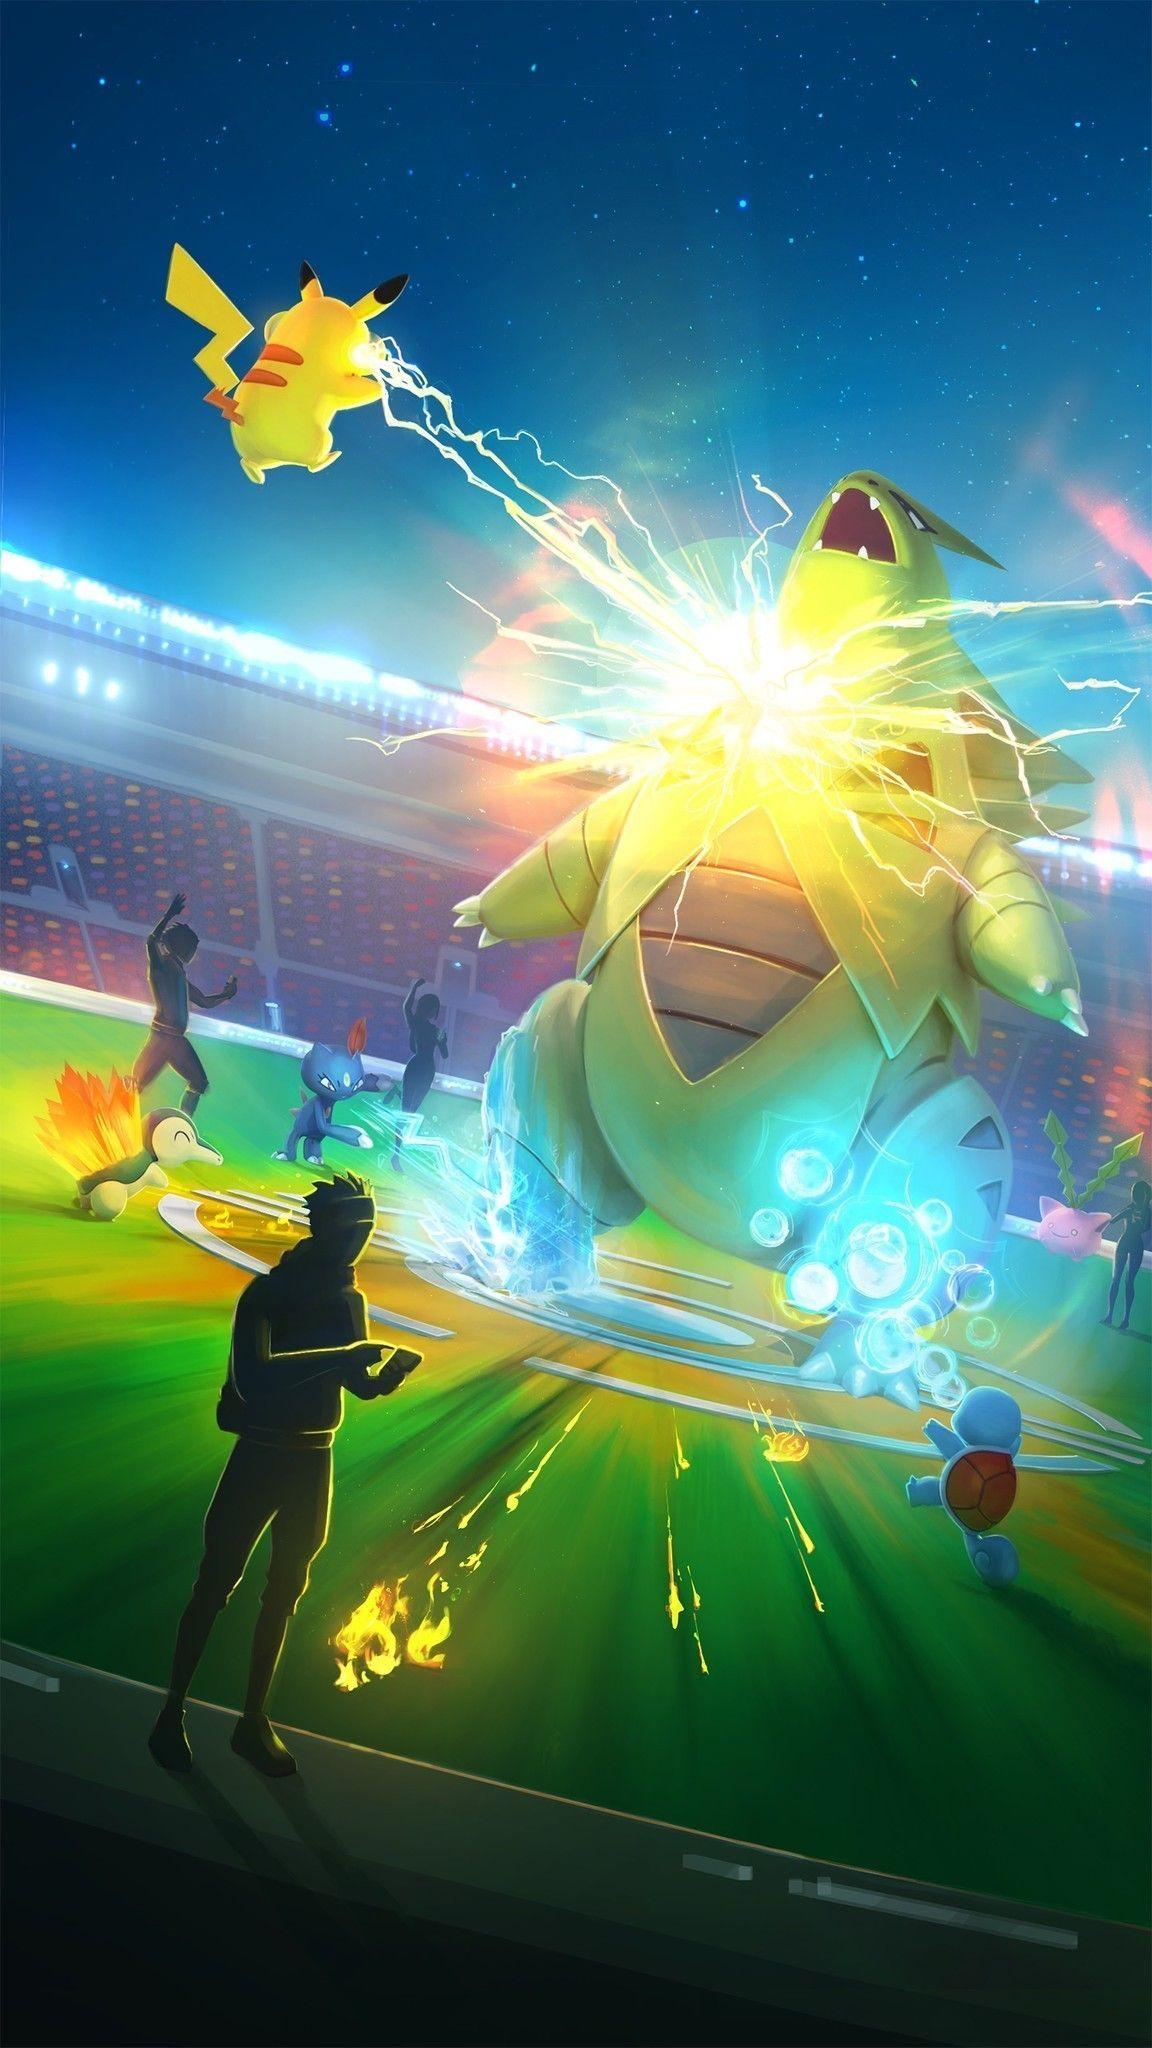 Official Pokémon Go wallpaper for 2021